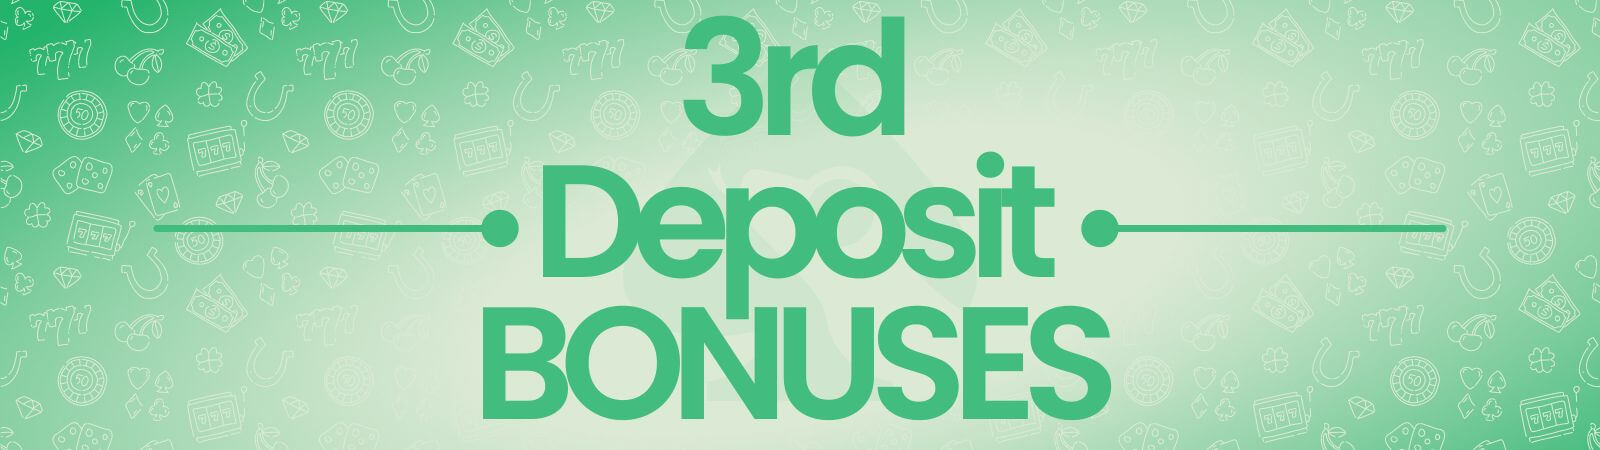 3rd deposit bonus uk